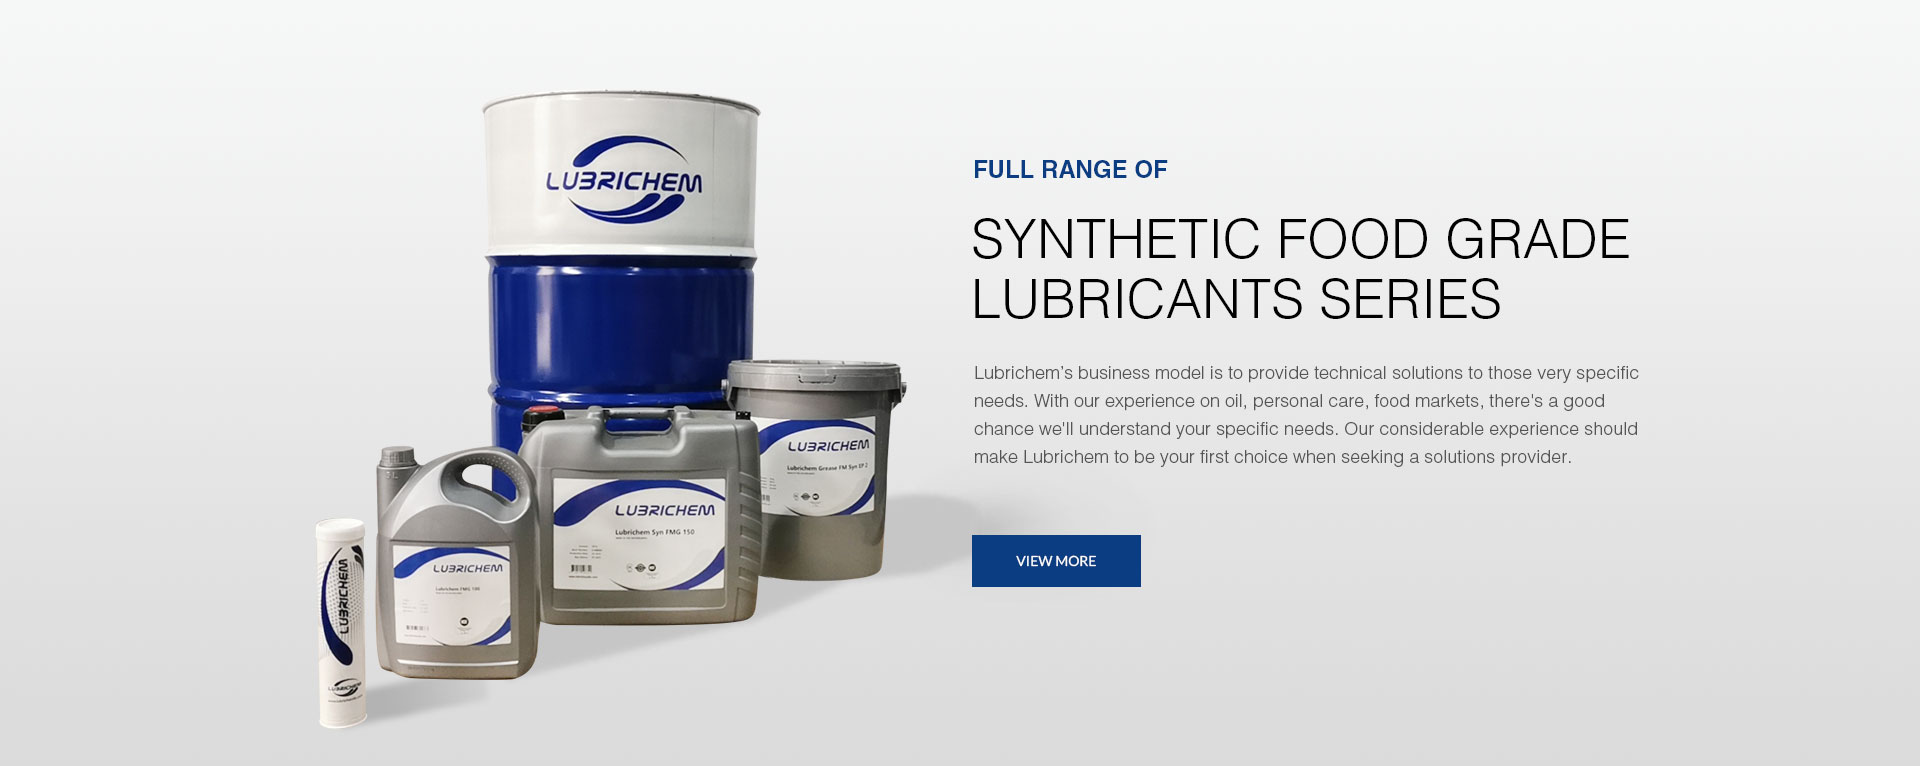 Full Range of Synthetic Food Grade lubricants series